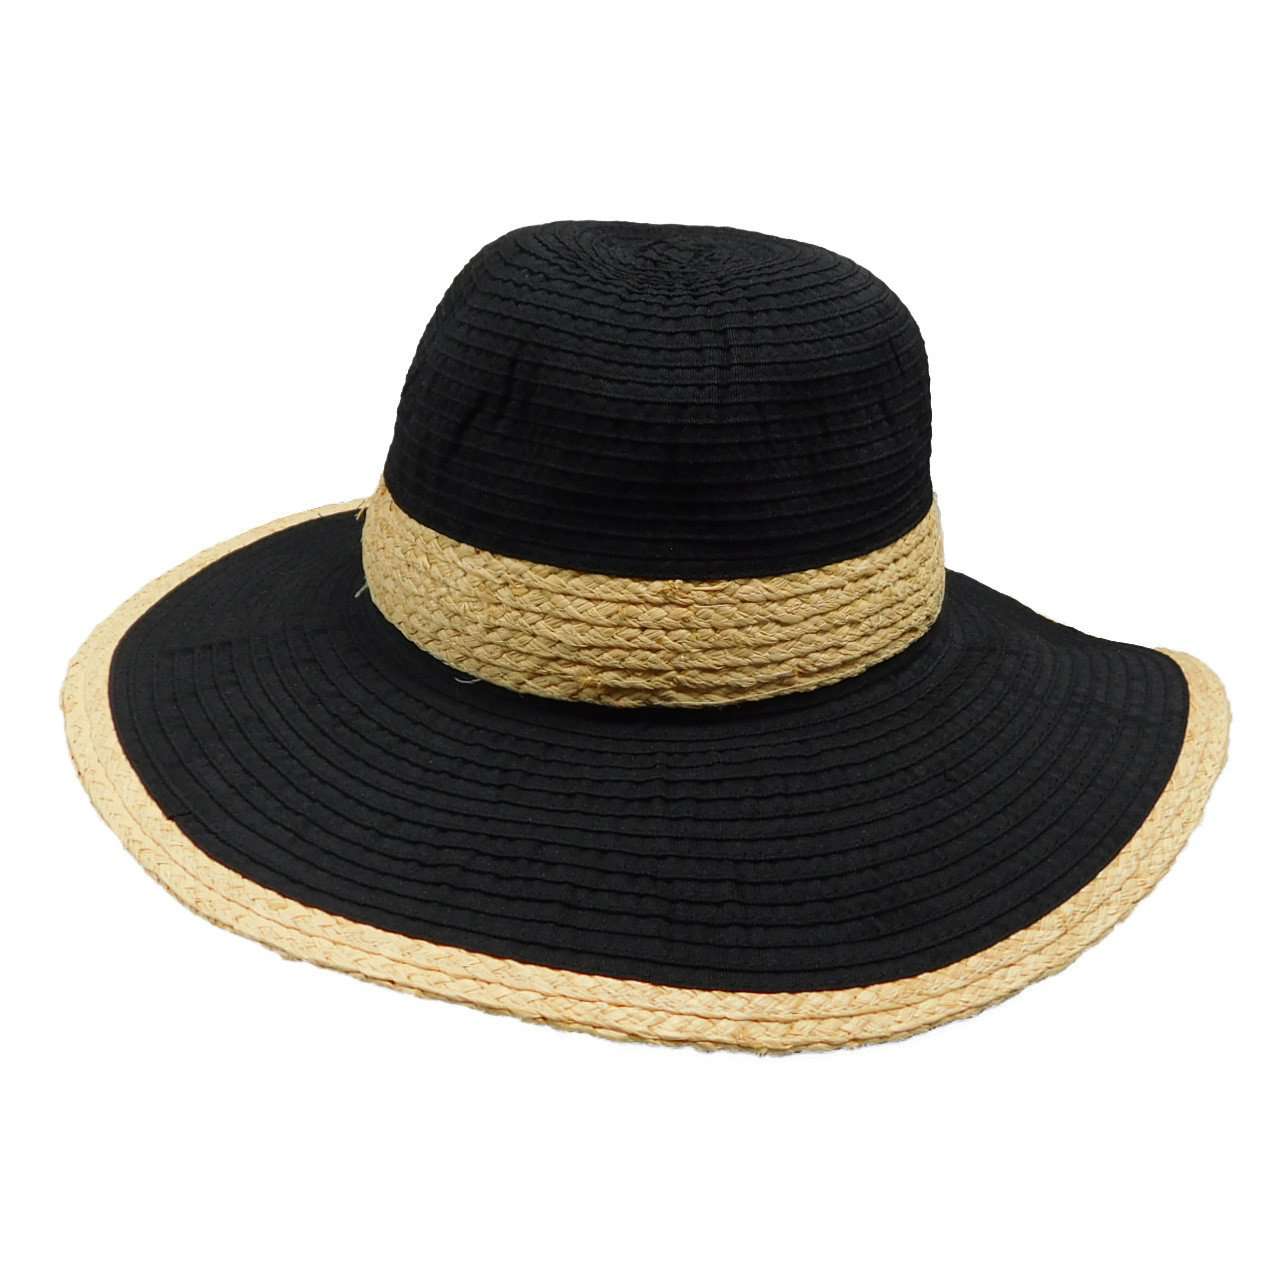 Ribbon Sun Hat with Raffia Trim - Tropical Trends Hats Floppy Hat Scala Hats LC809-ASST Black OSA (57 cm) 